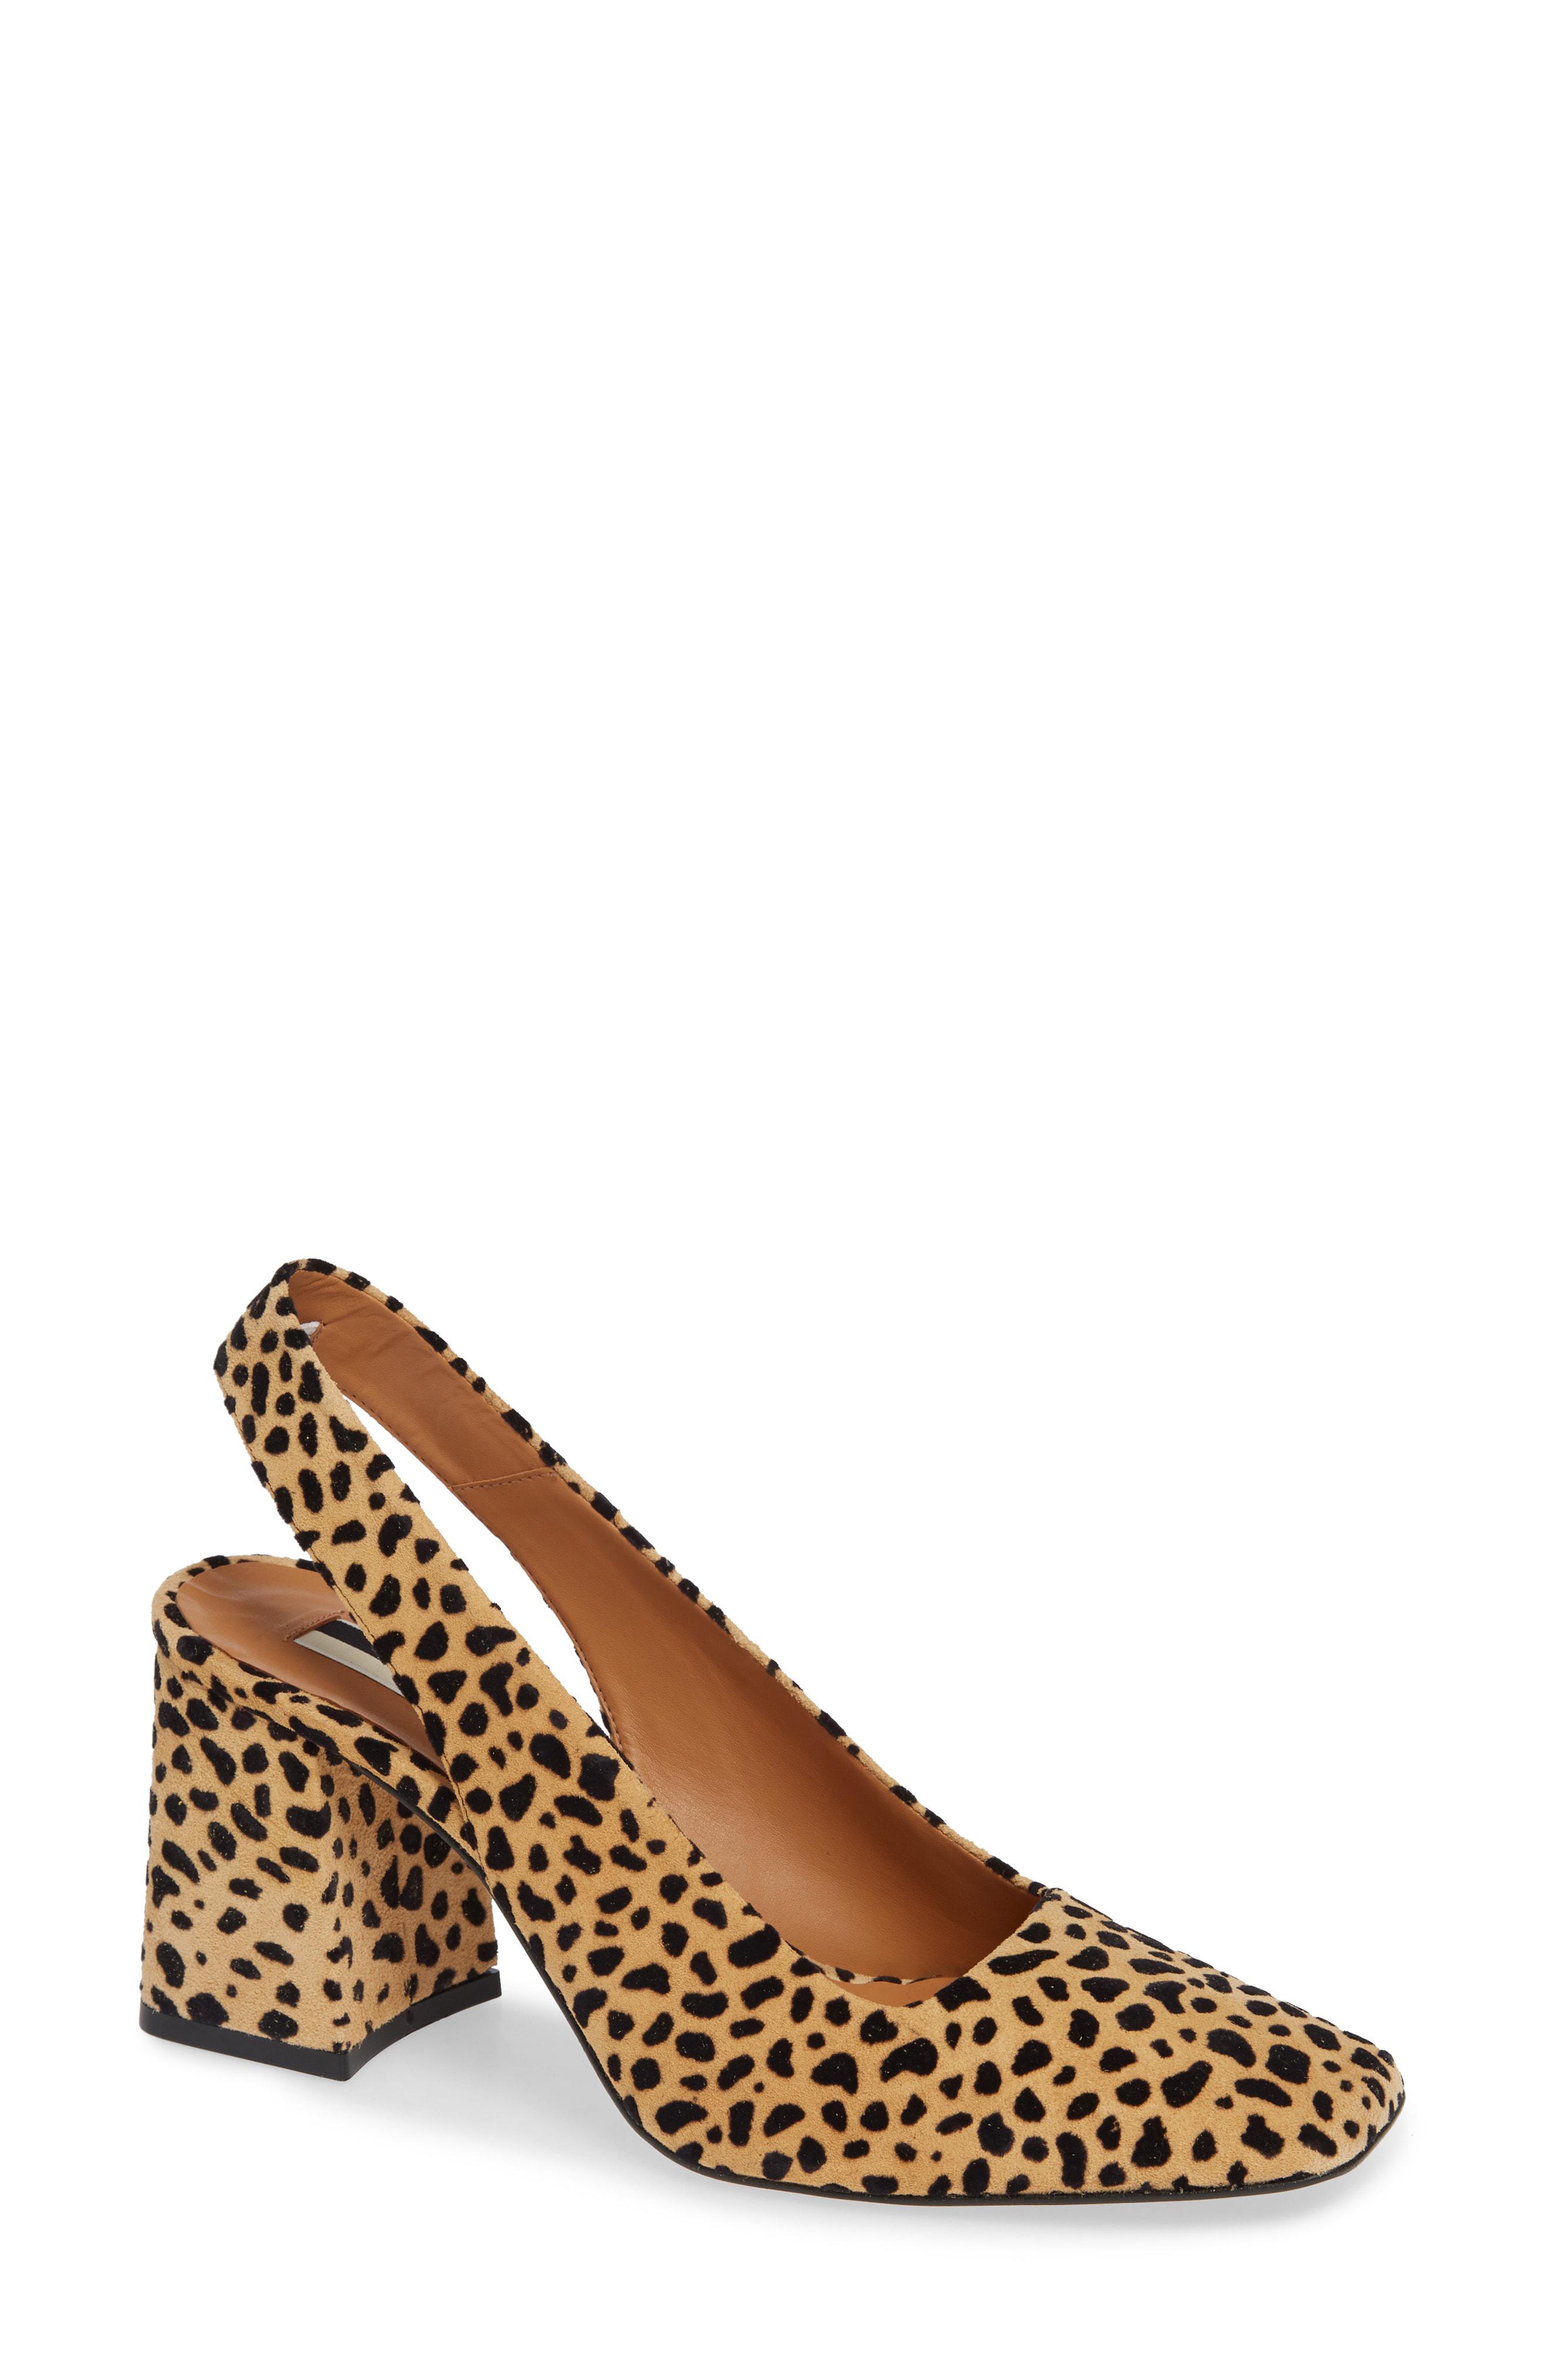 TOPSHOP Gainor Leopard Print Slingback Shoes Brown